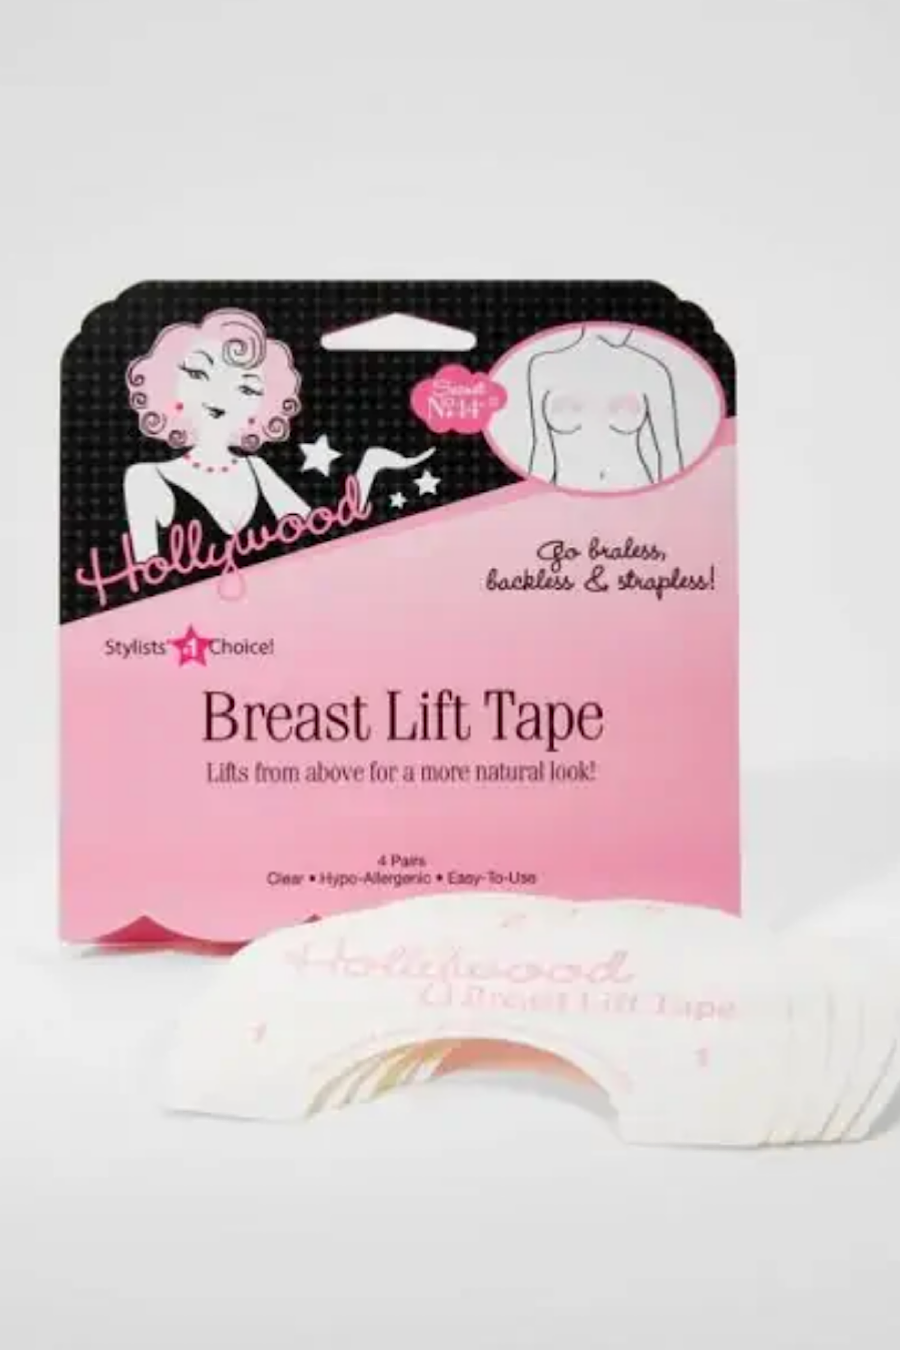 Hollywood Fashion Secrets Breast Lift Tape